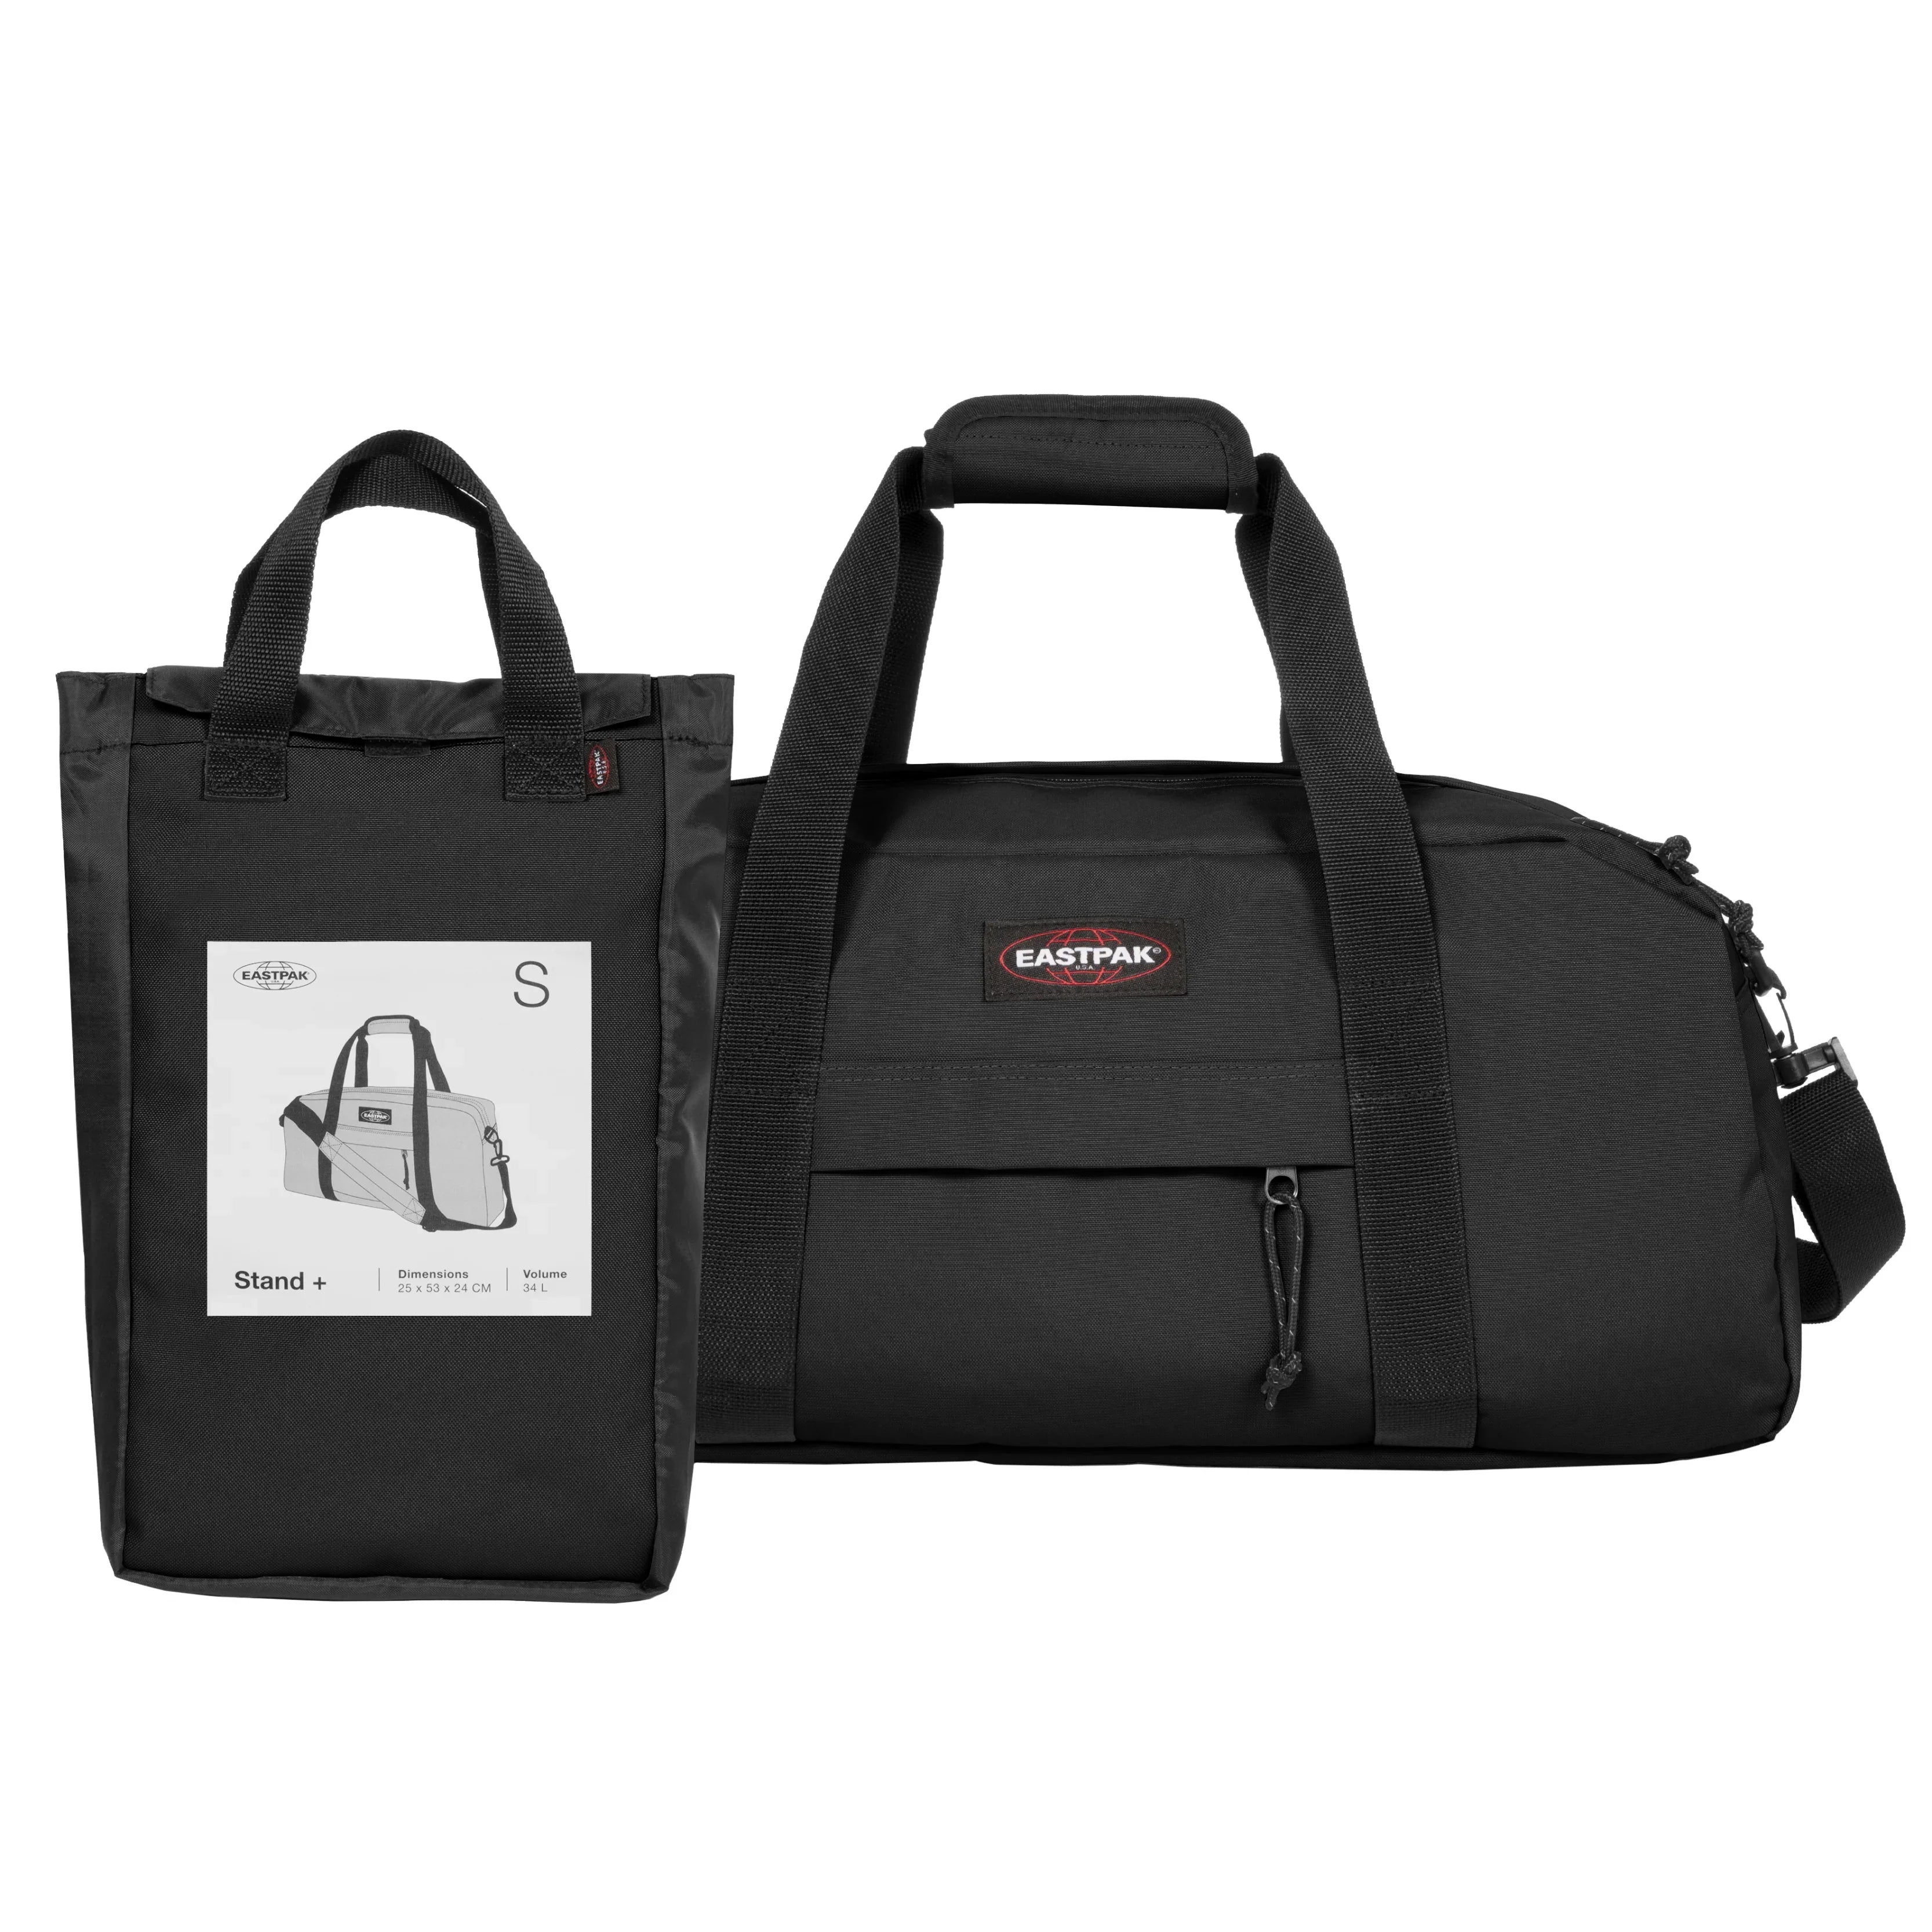 Eastpak Authentic Travel Stand Plus travel bag 53 cm - black